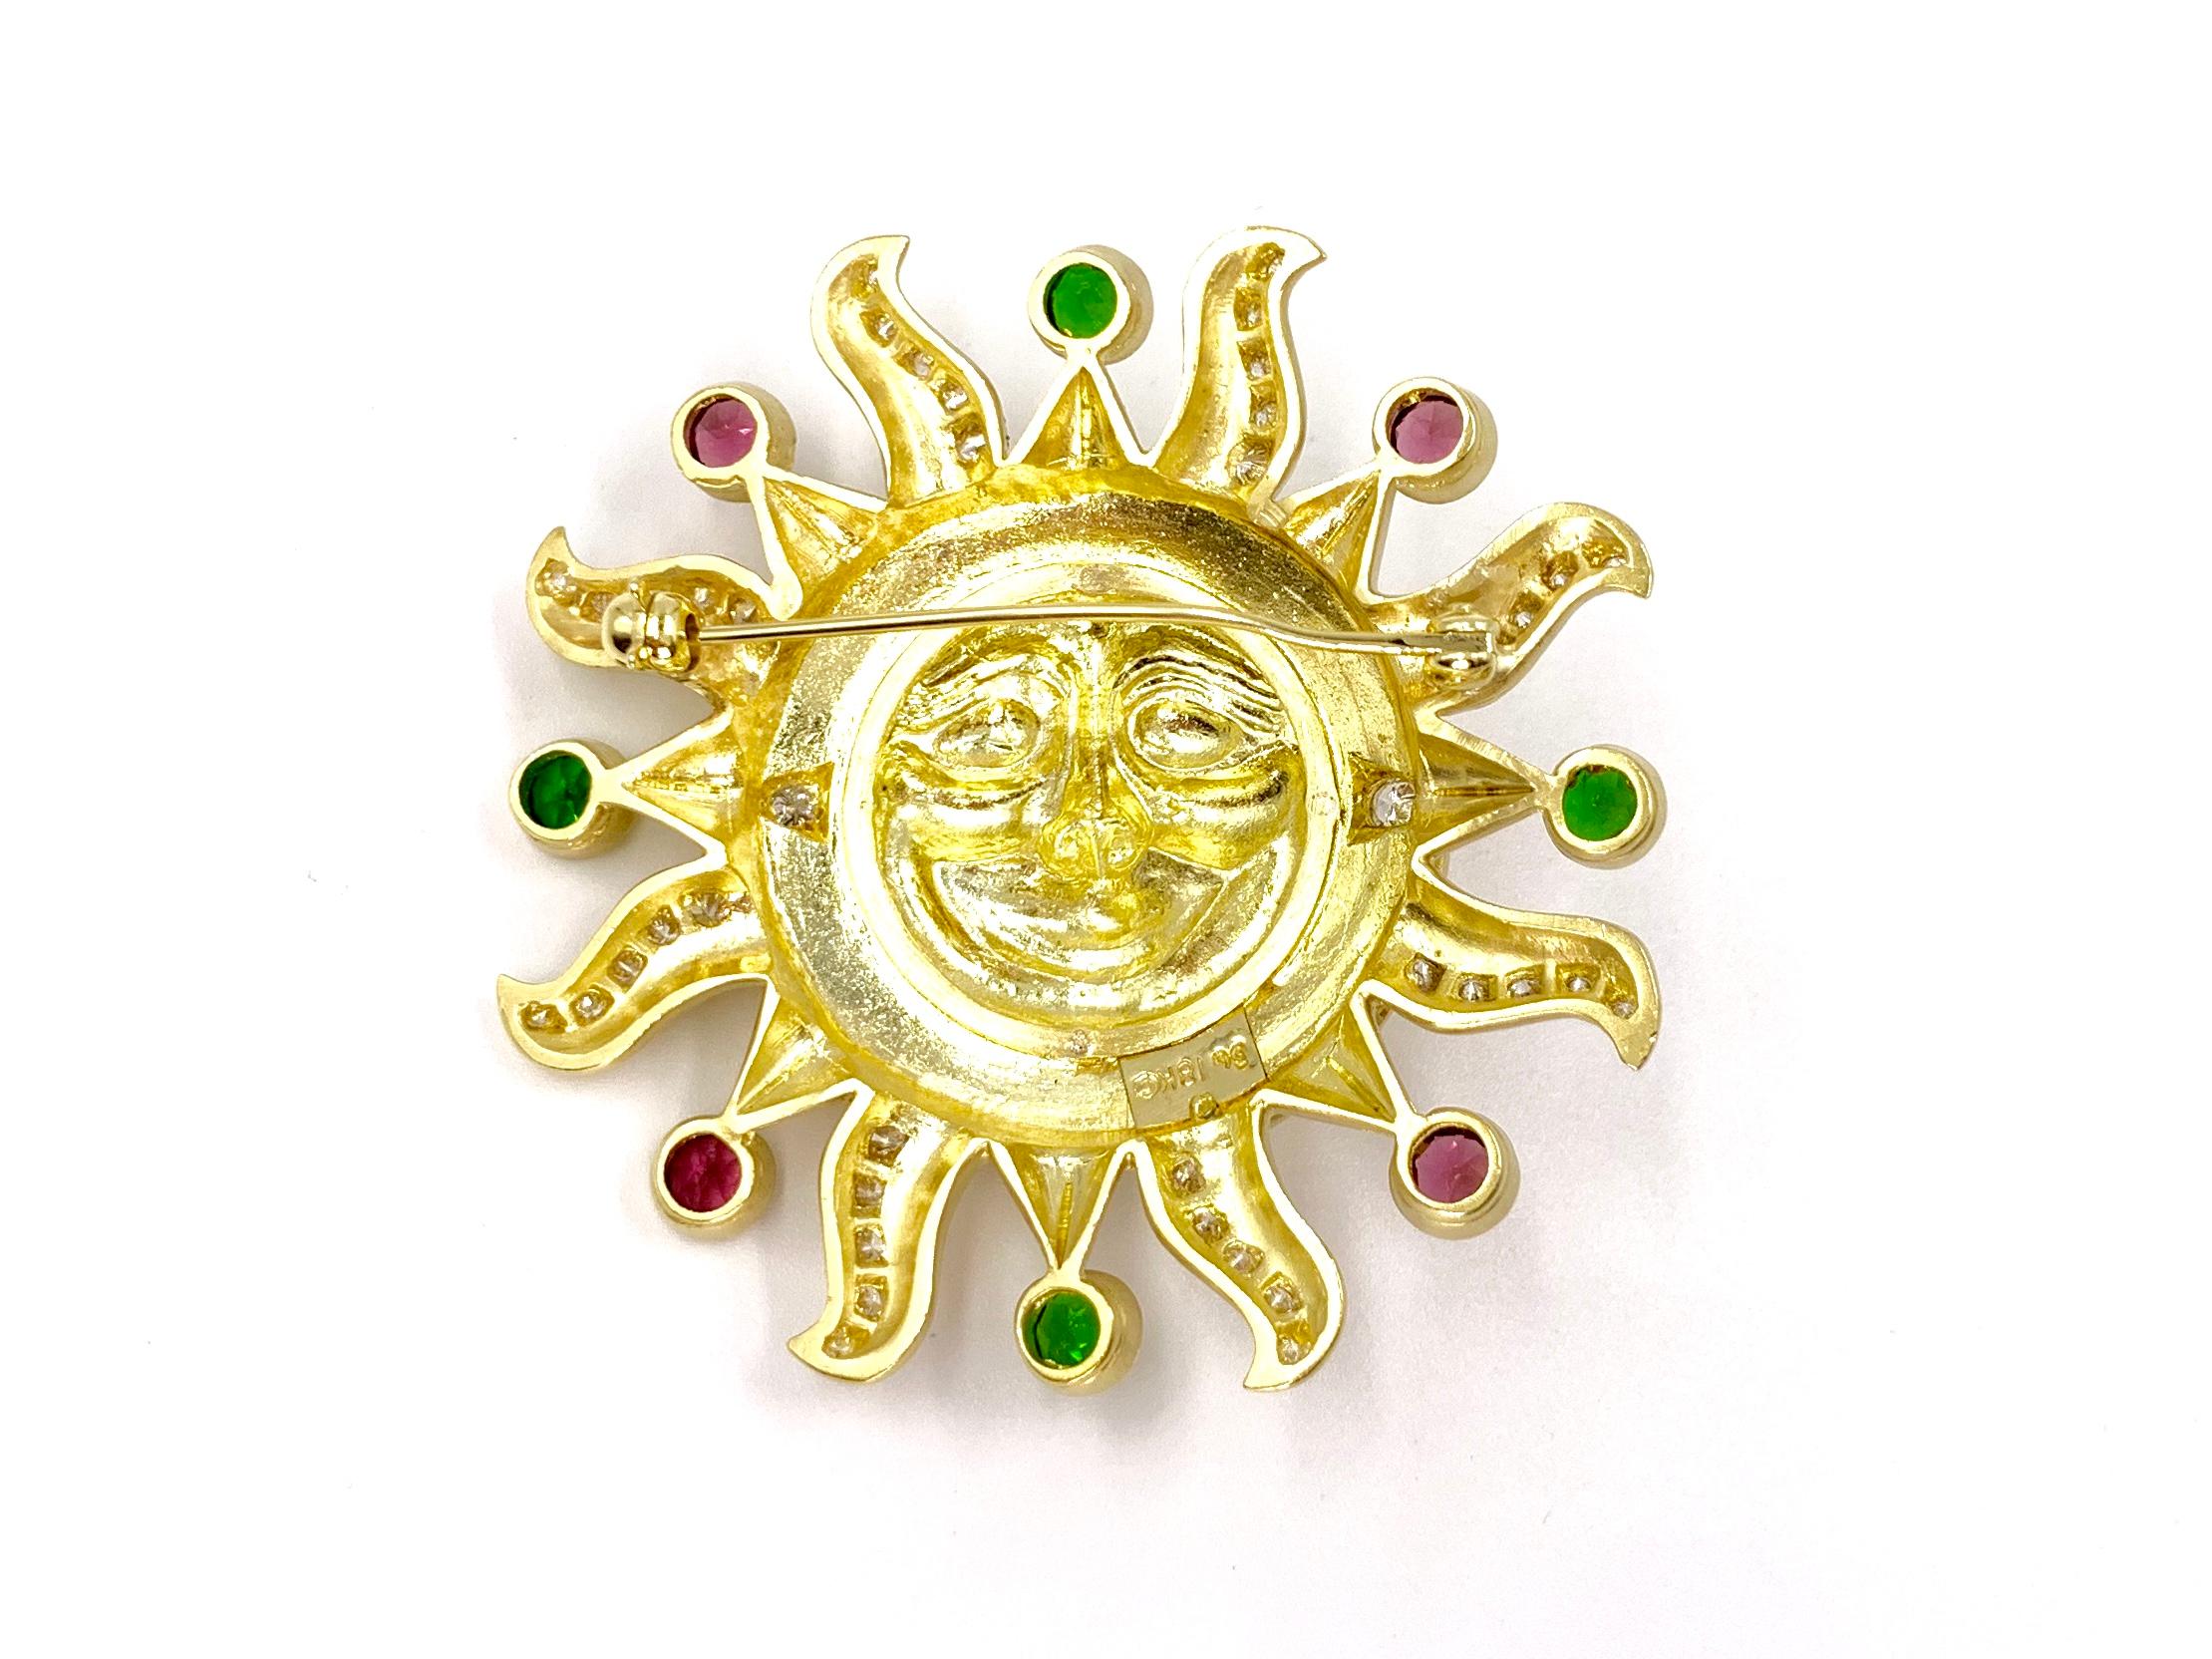 Round Cut 18 Karat Sun Brooch with Diamonds and Tourmaline Gemstones